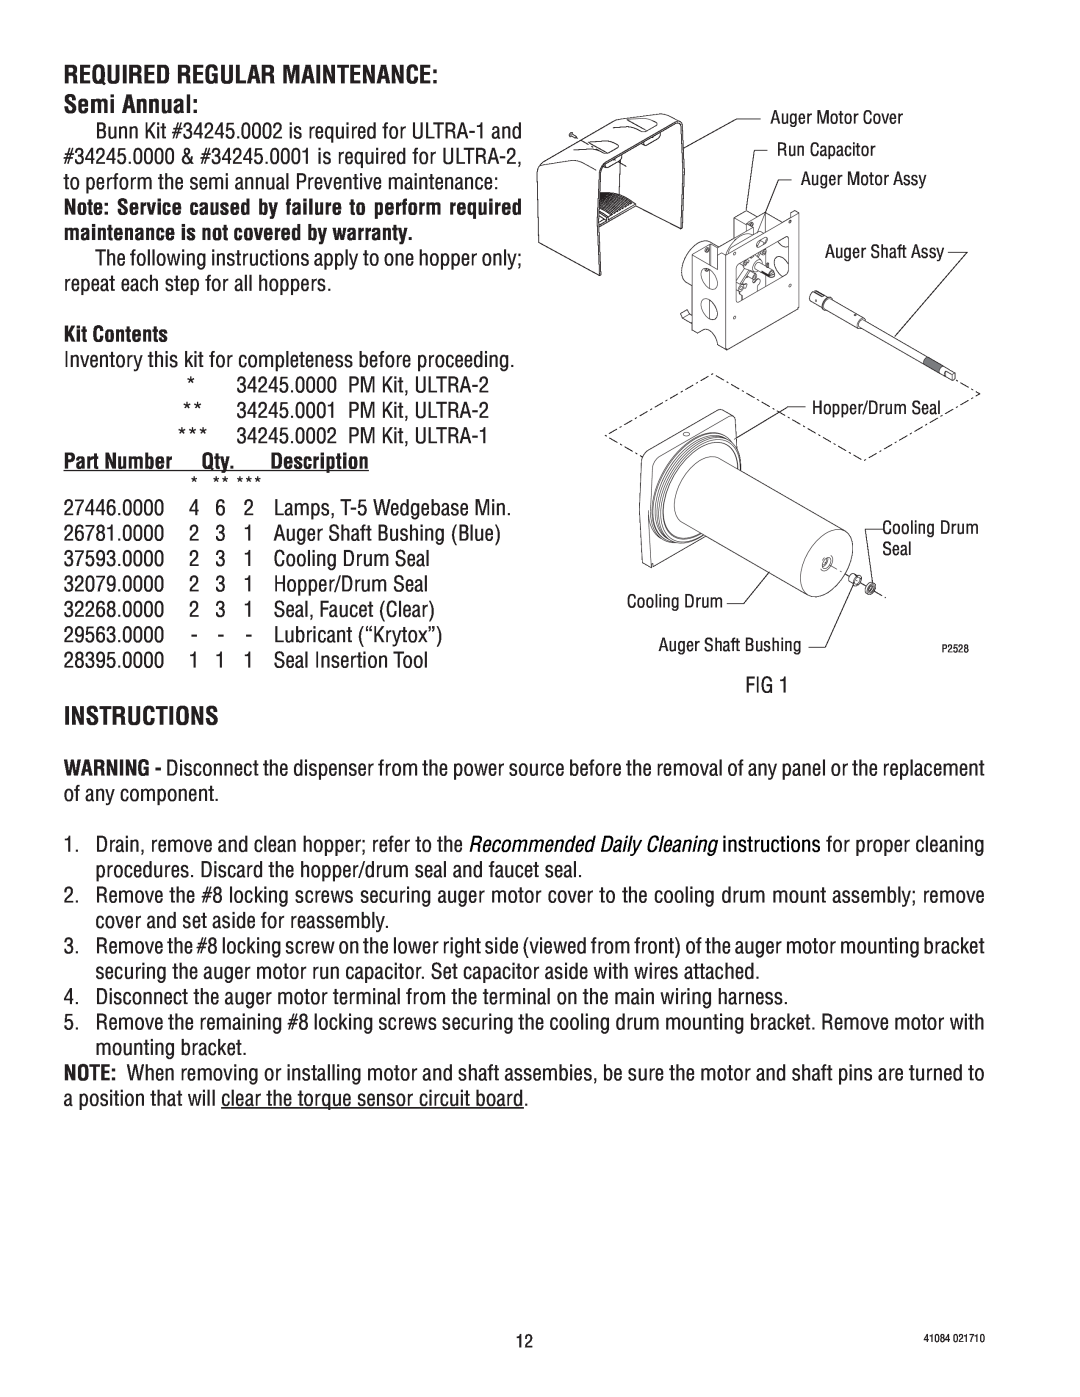 Bunn ULTRA-1 manual REQUIRED REGULAR MAINTENANCE Semi Annual, Instructions, Kit Contents, Description 